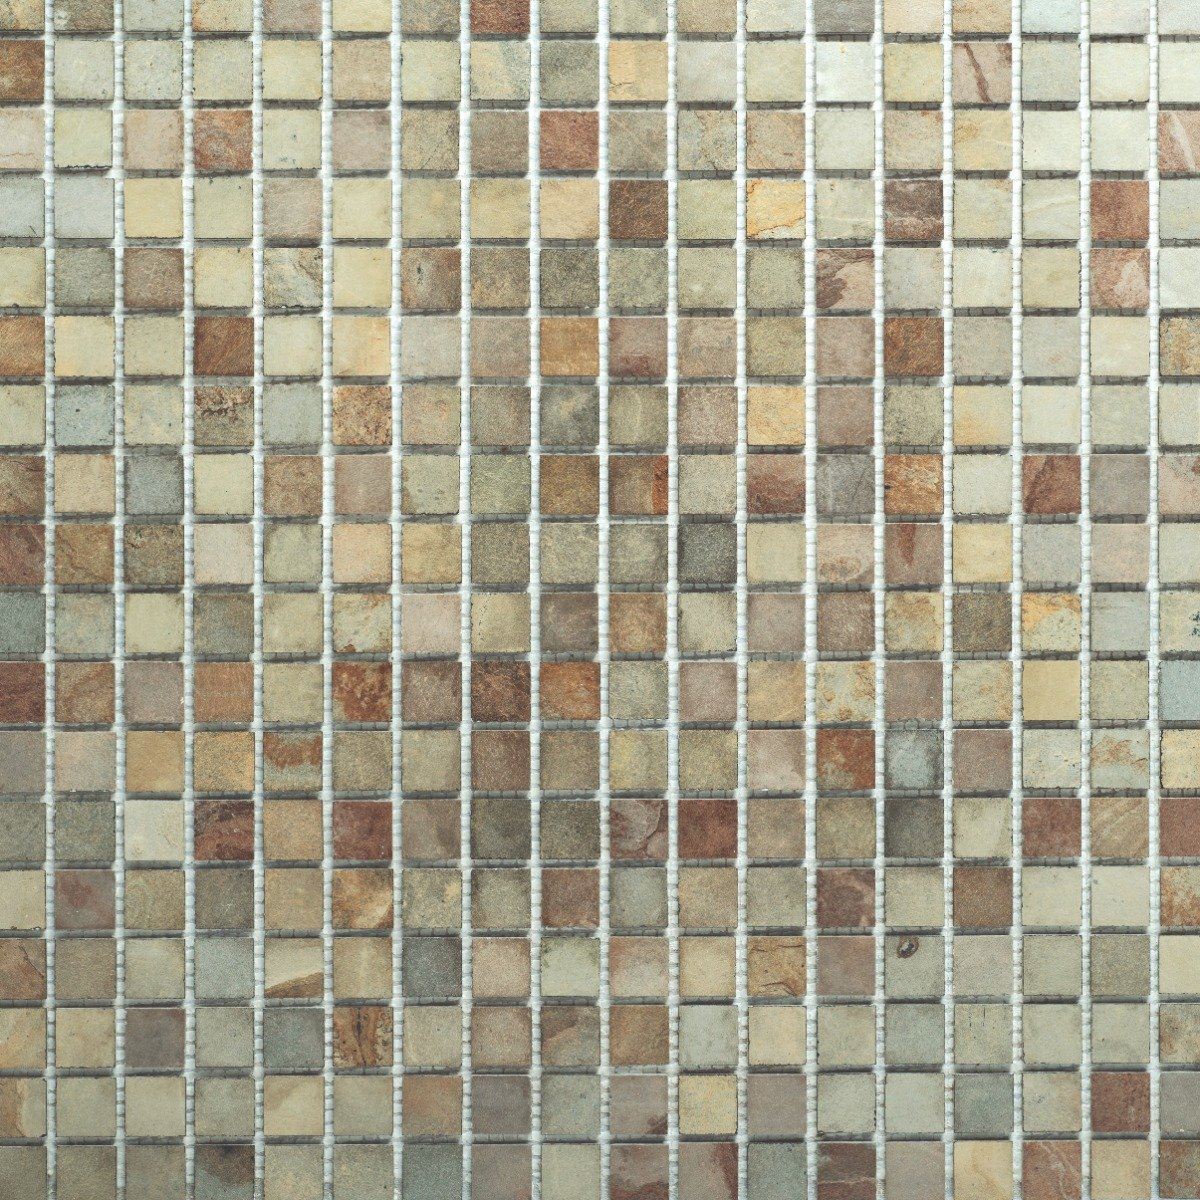 Slicedstone Mosaic Bathroom Tile Roll Beige (25x25mm squares) 1000 x 500mm